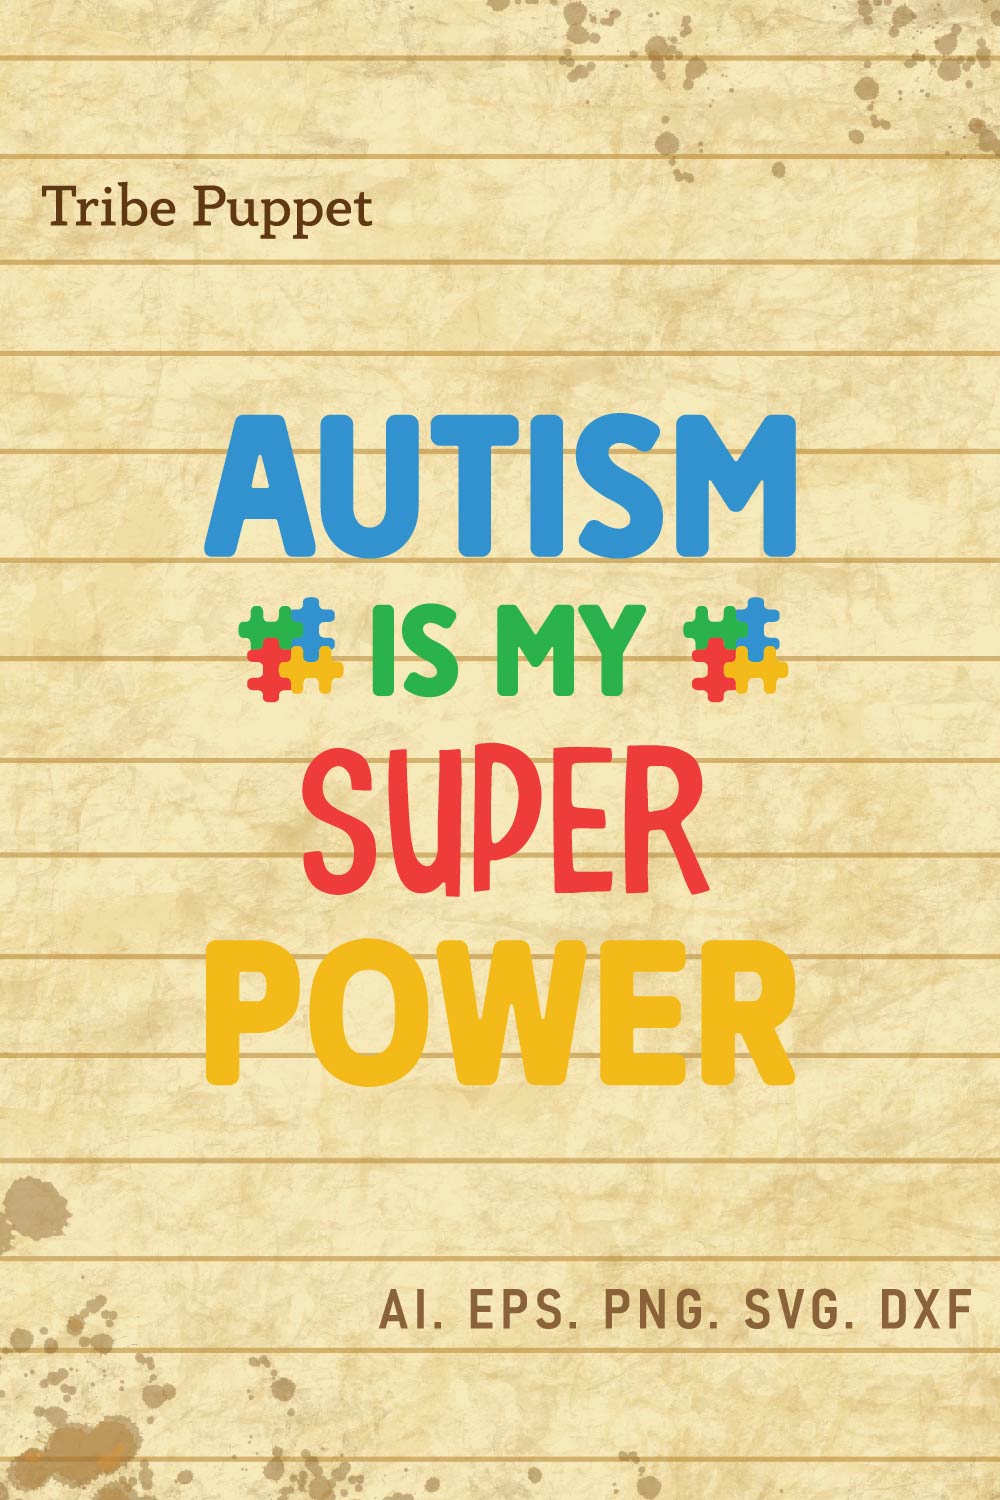 Autism Quotes pinterest preview image.